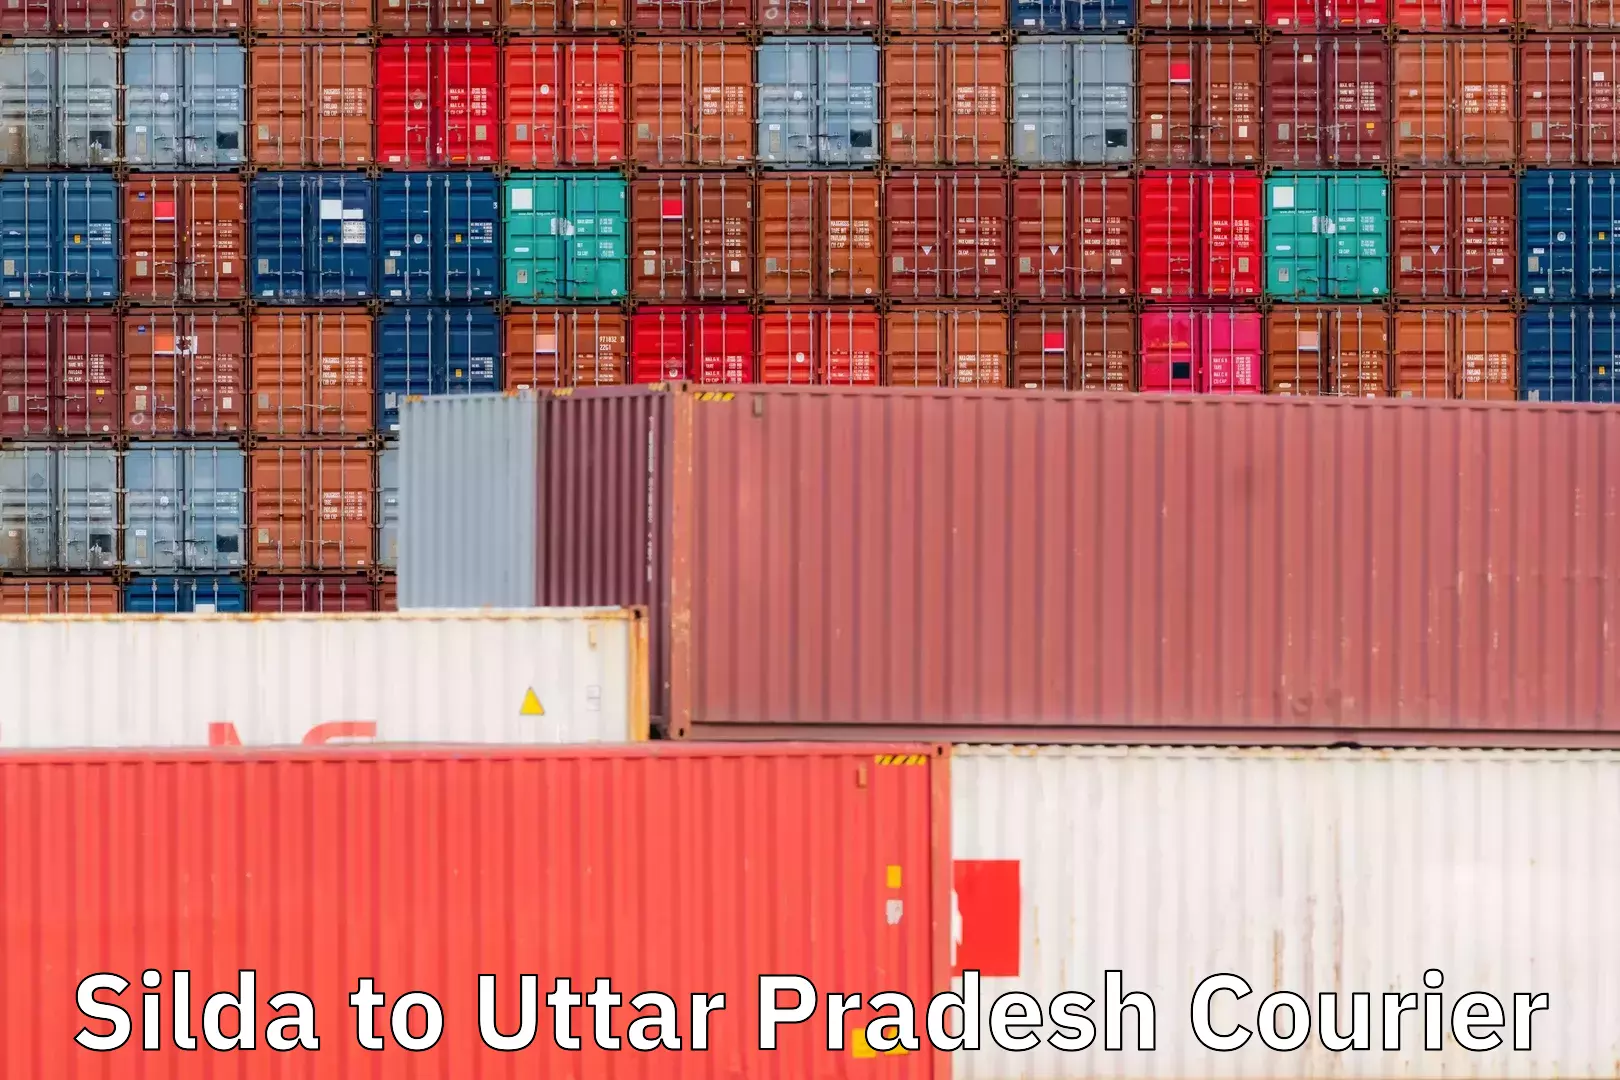 Global shipping networks in Silda to Uttar Pradesh